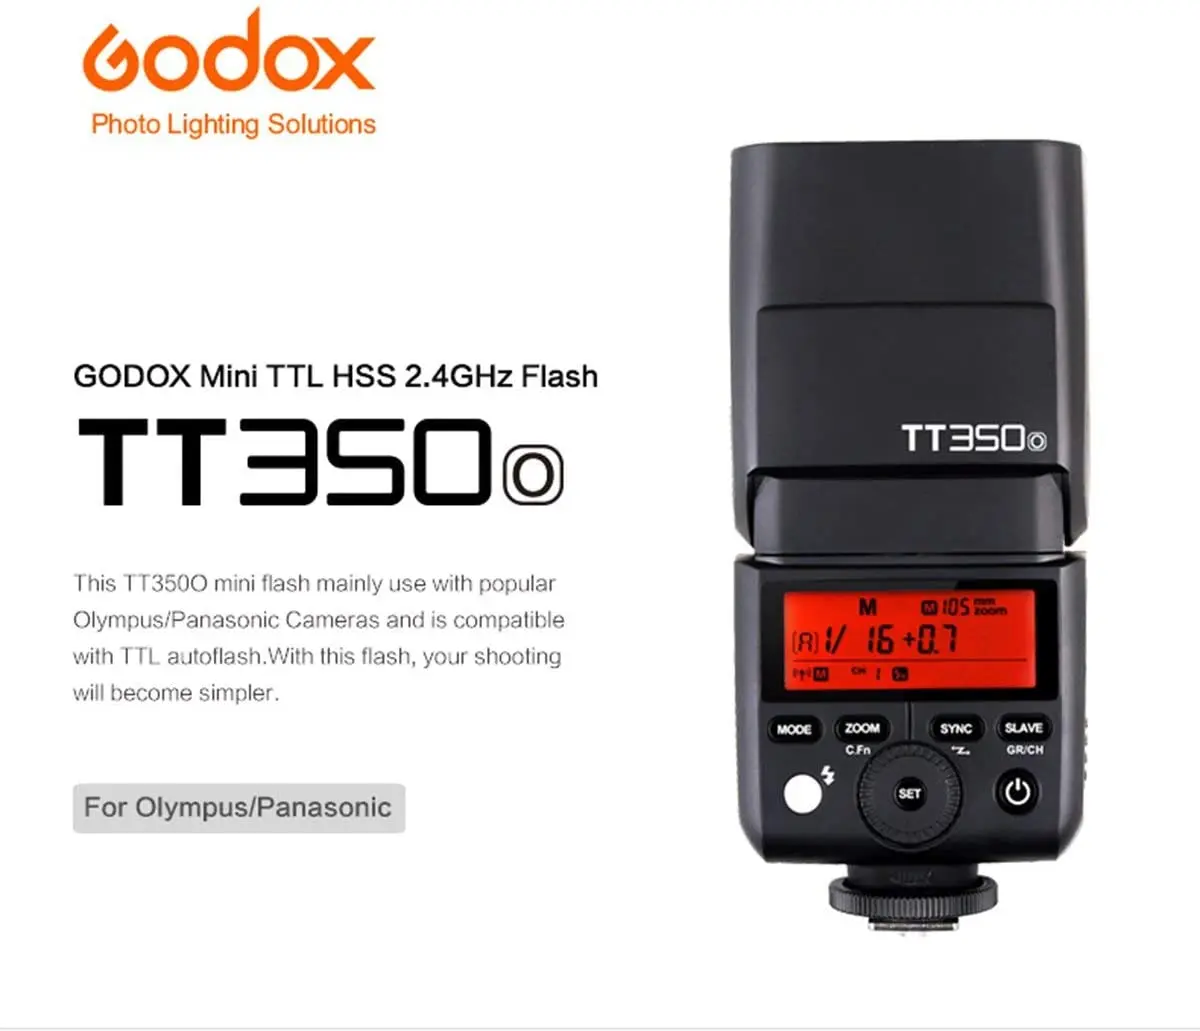 

Godox TT350o 2.4G Wireless TTL Flash Speedlite GN36 1/8000s HSS for Olympus E-P5 E-PL5 E-PL6 E-PL7 E-PL8 Pen-F DSLR Camera